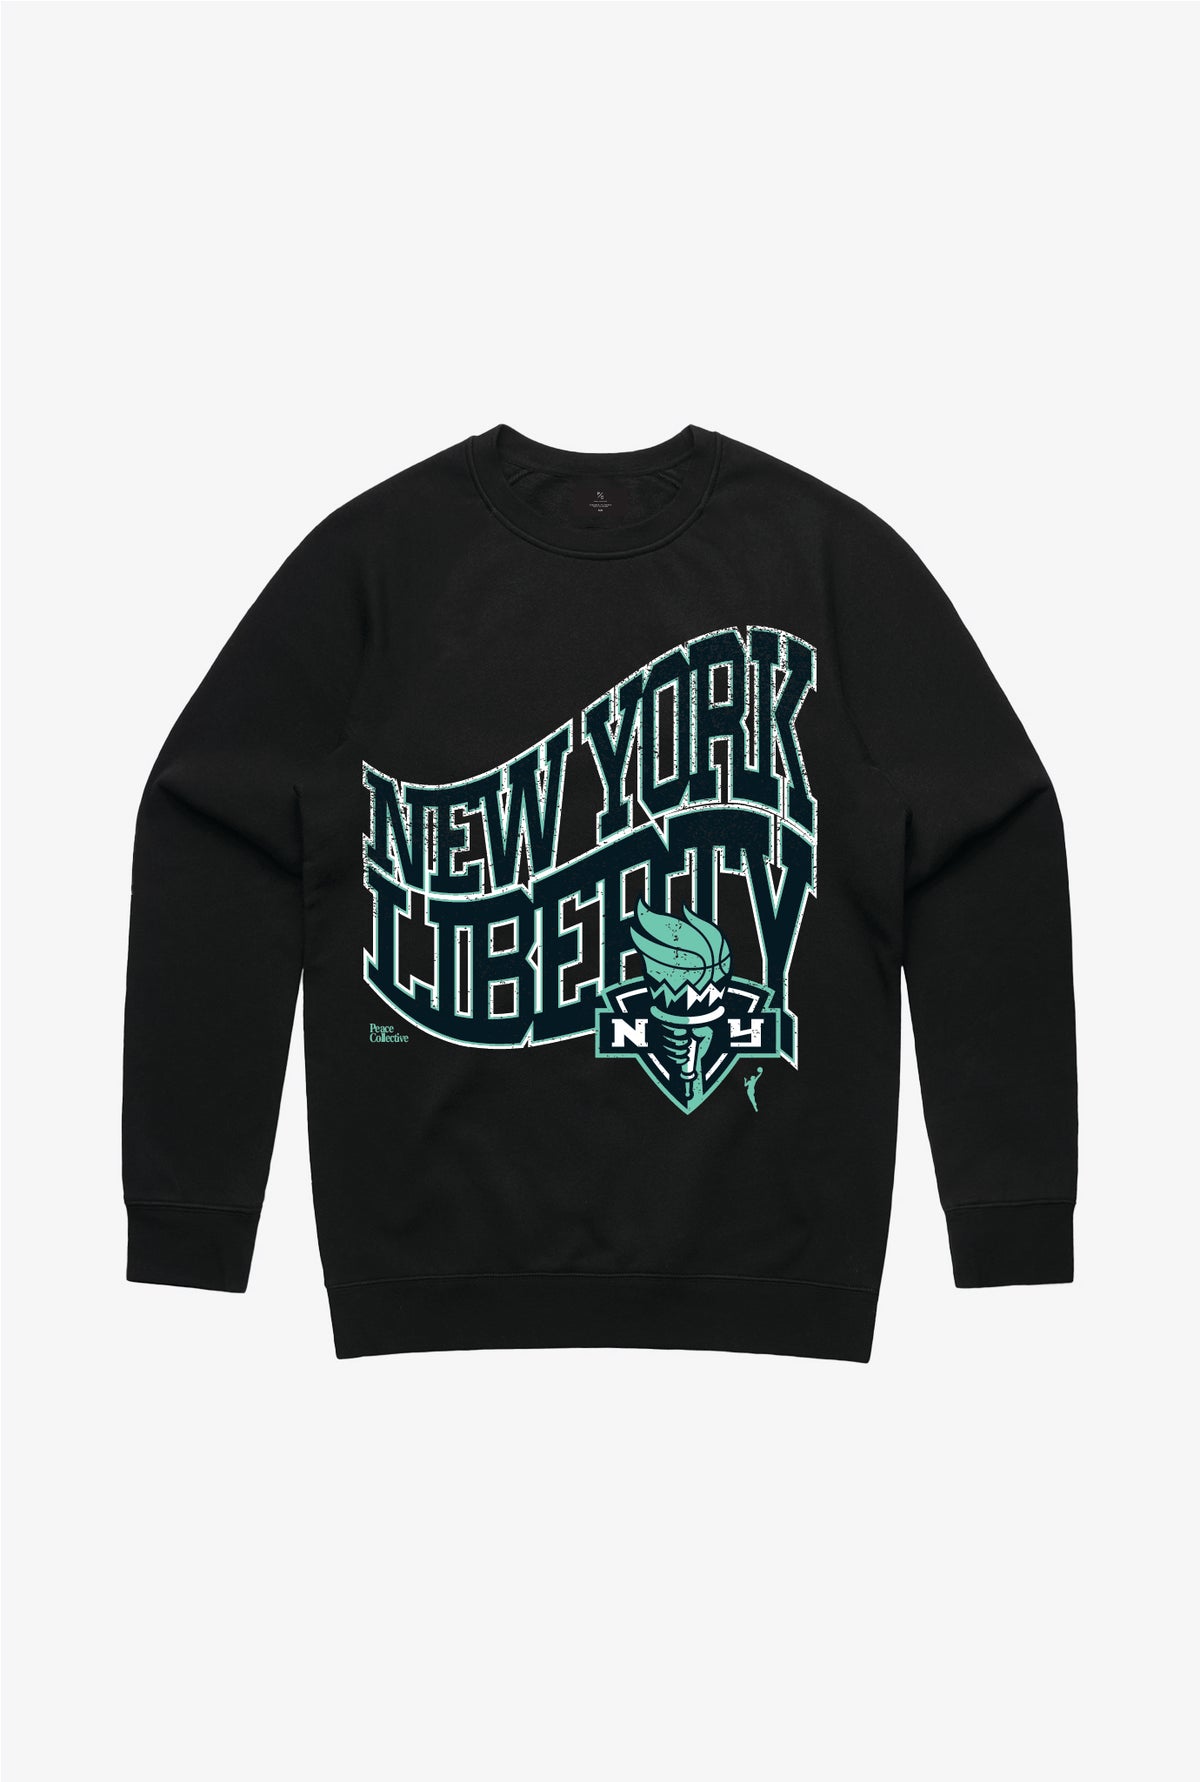 NY Liberty Crewneck - Black